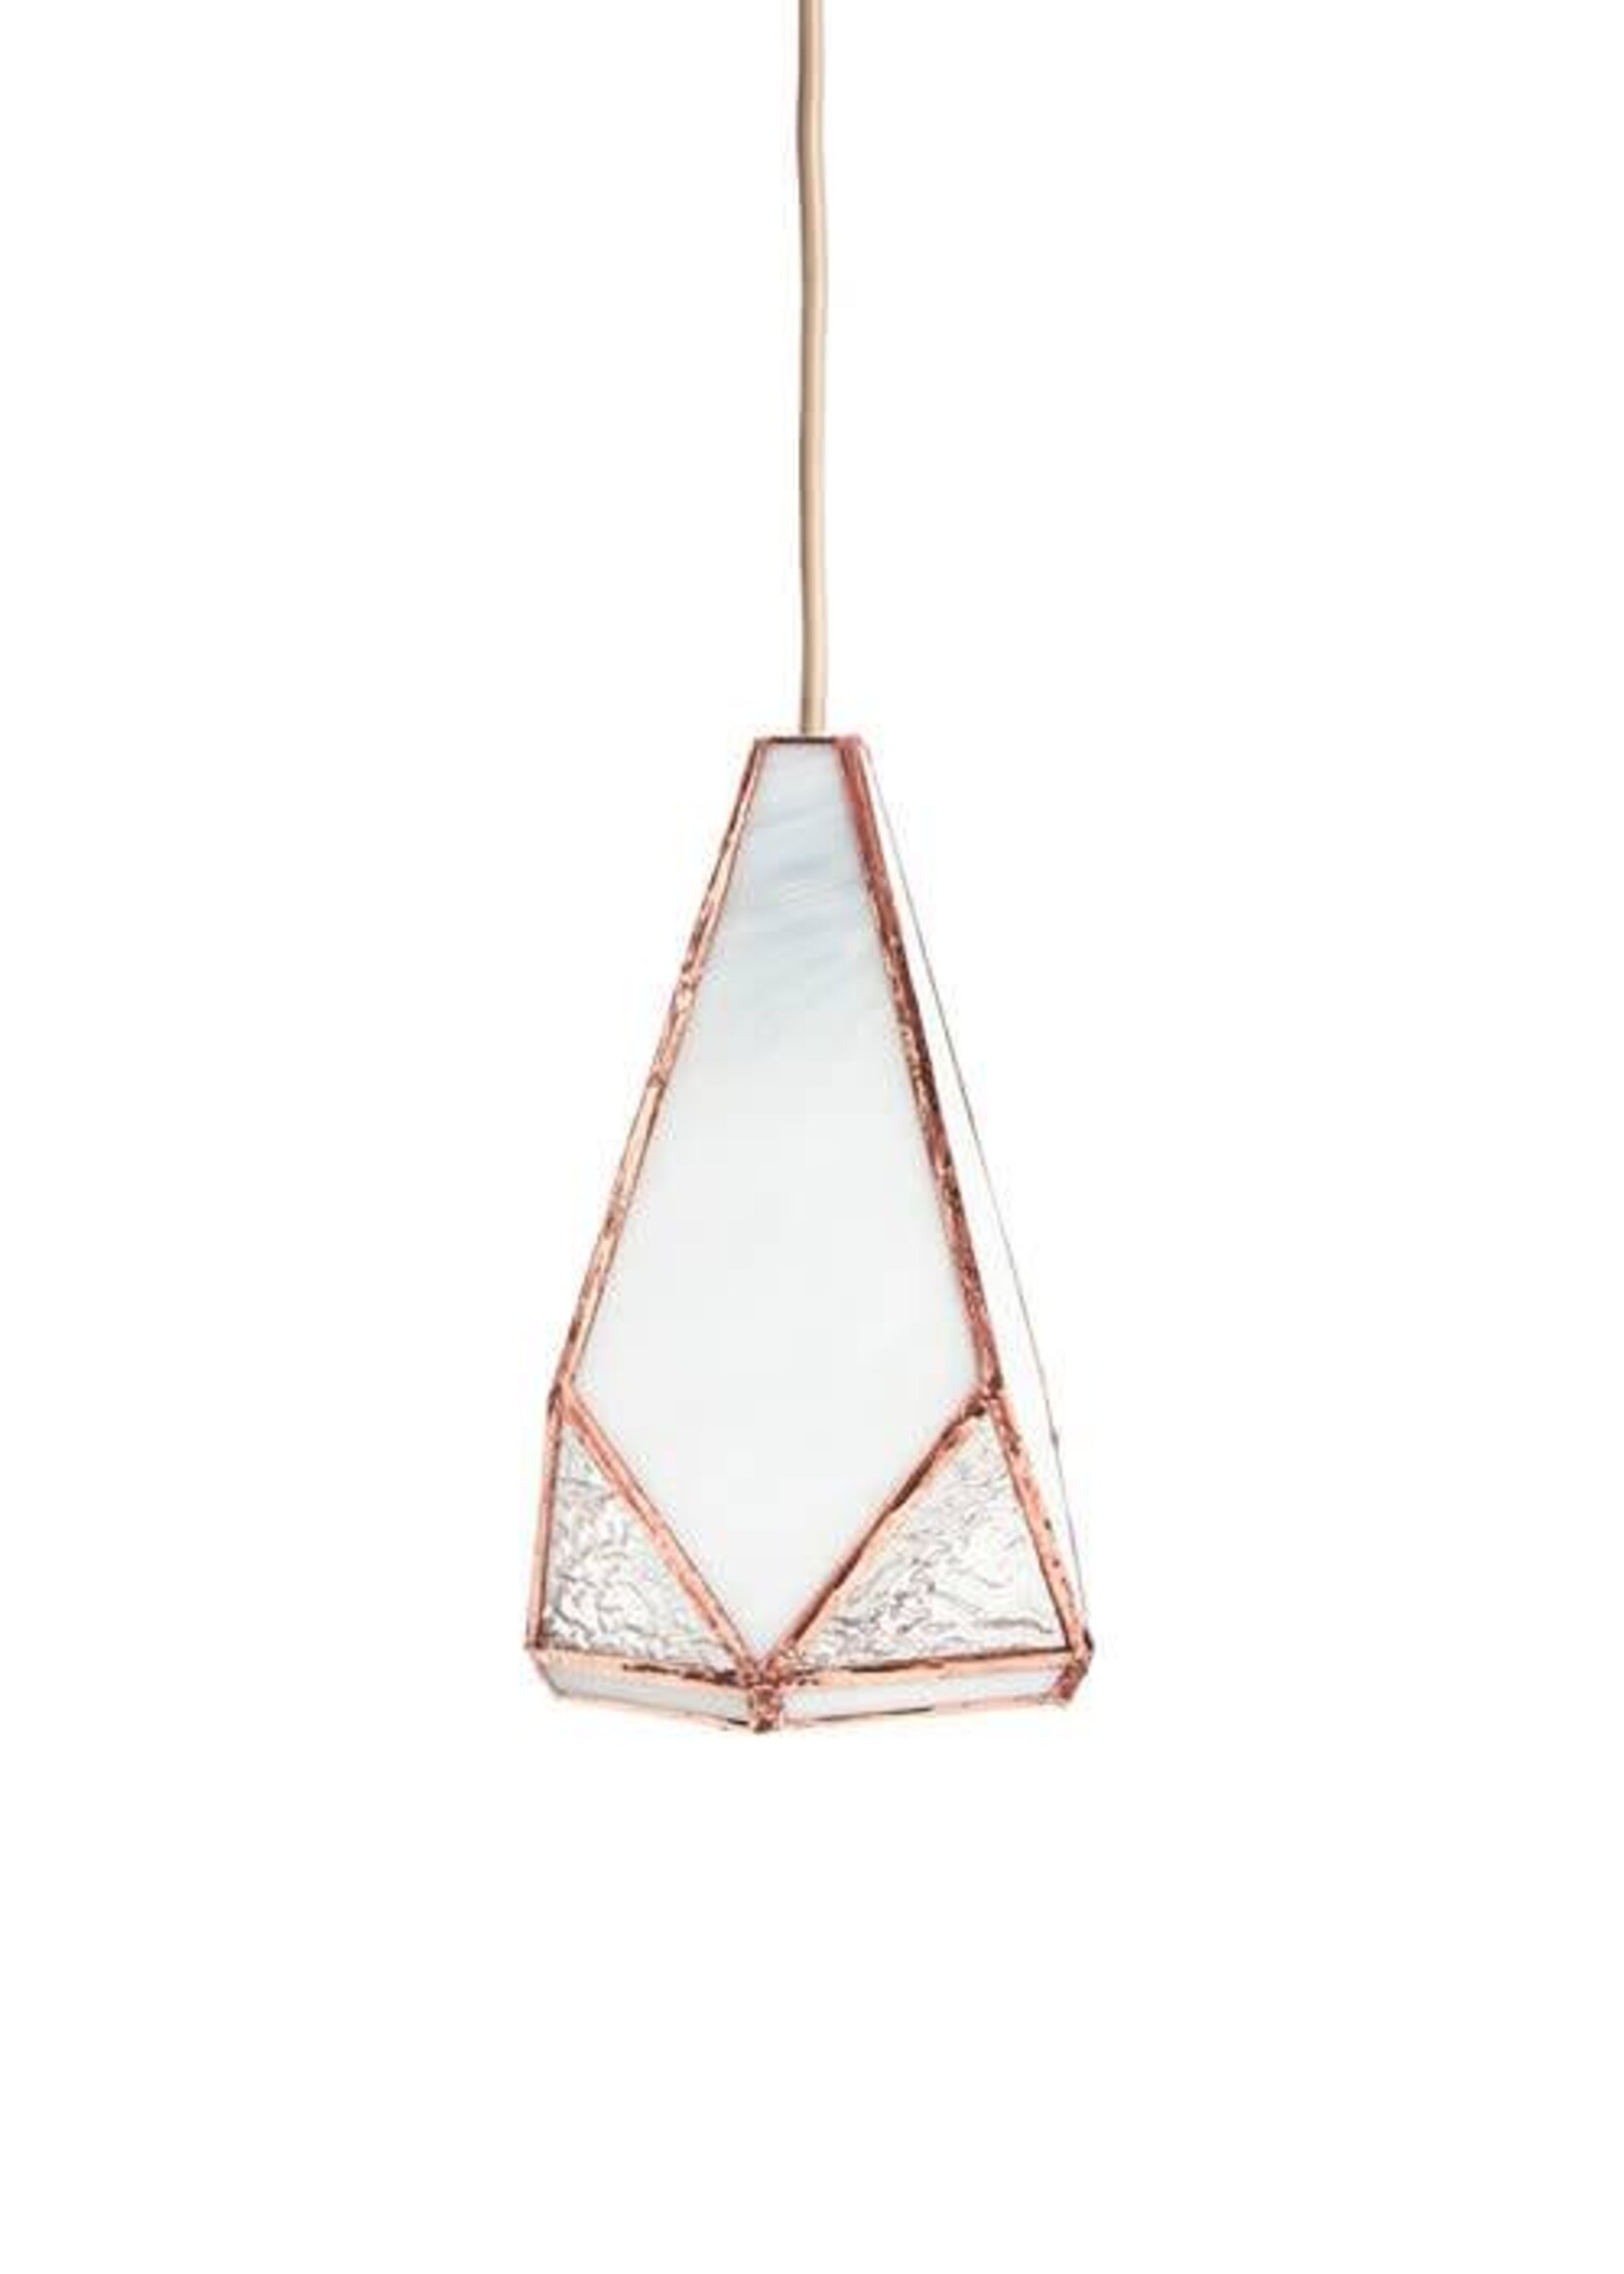 Flannery Cronin White and Pink Greta Pendant Lamp